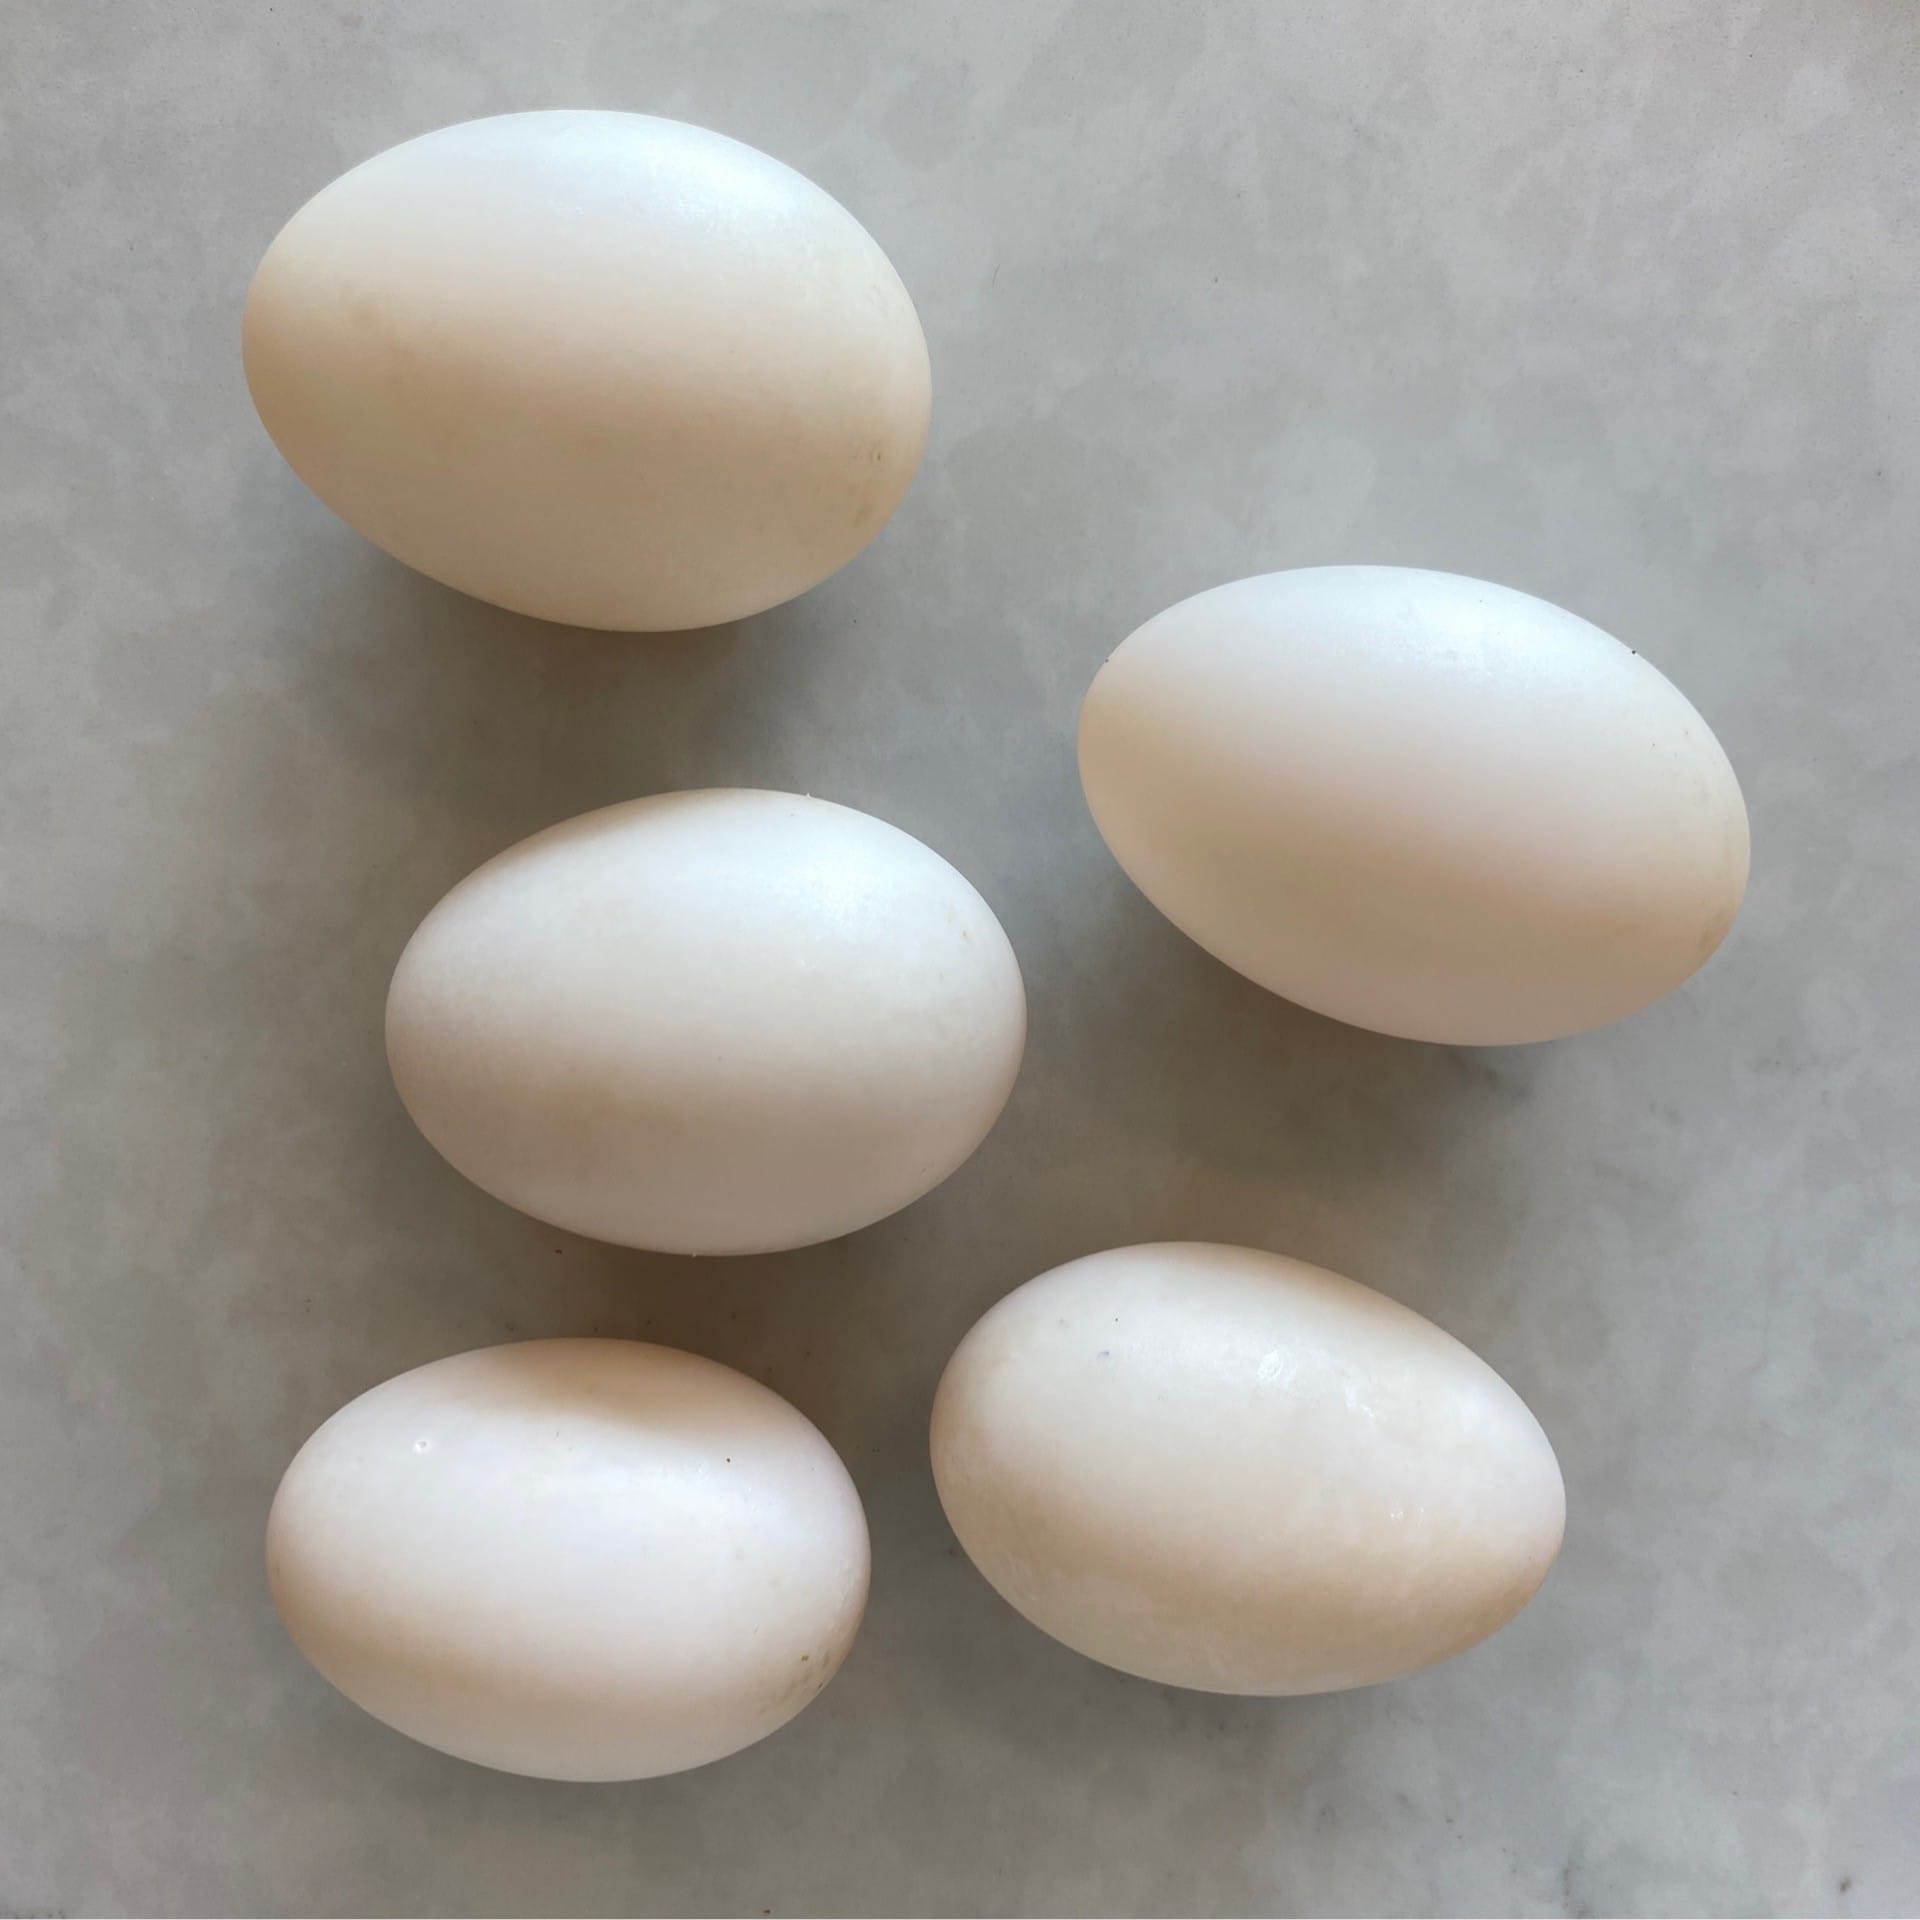 duck eggs full size organic half dozen